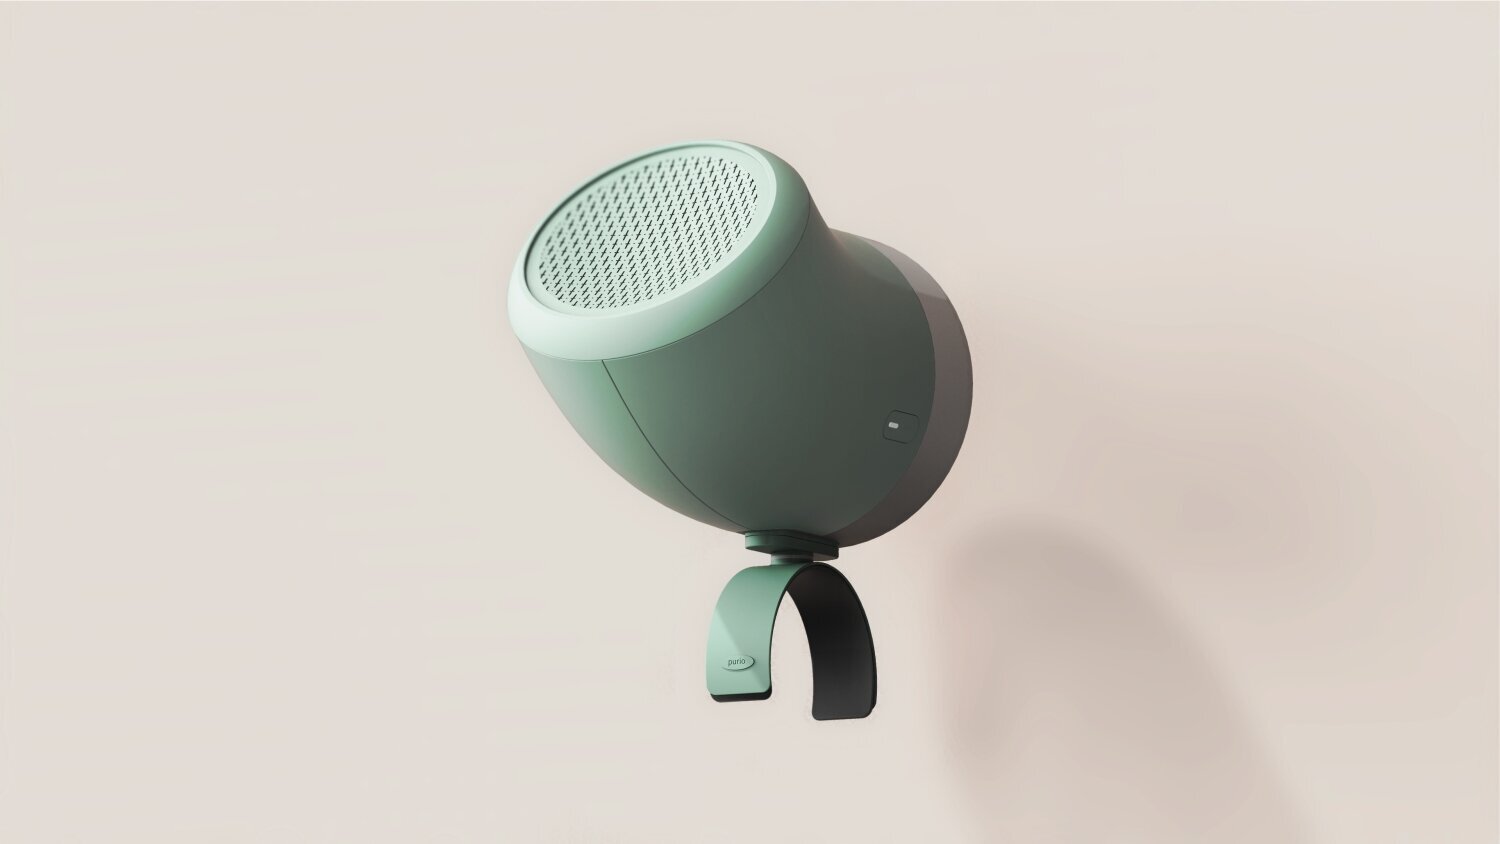 Fountain Studio Develops Air Purifier For The Stroller